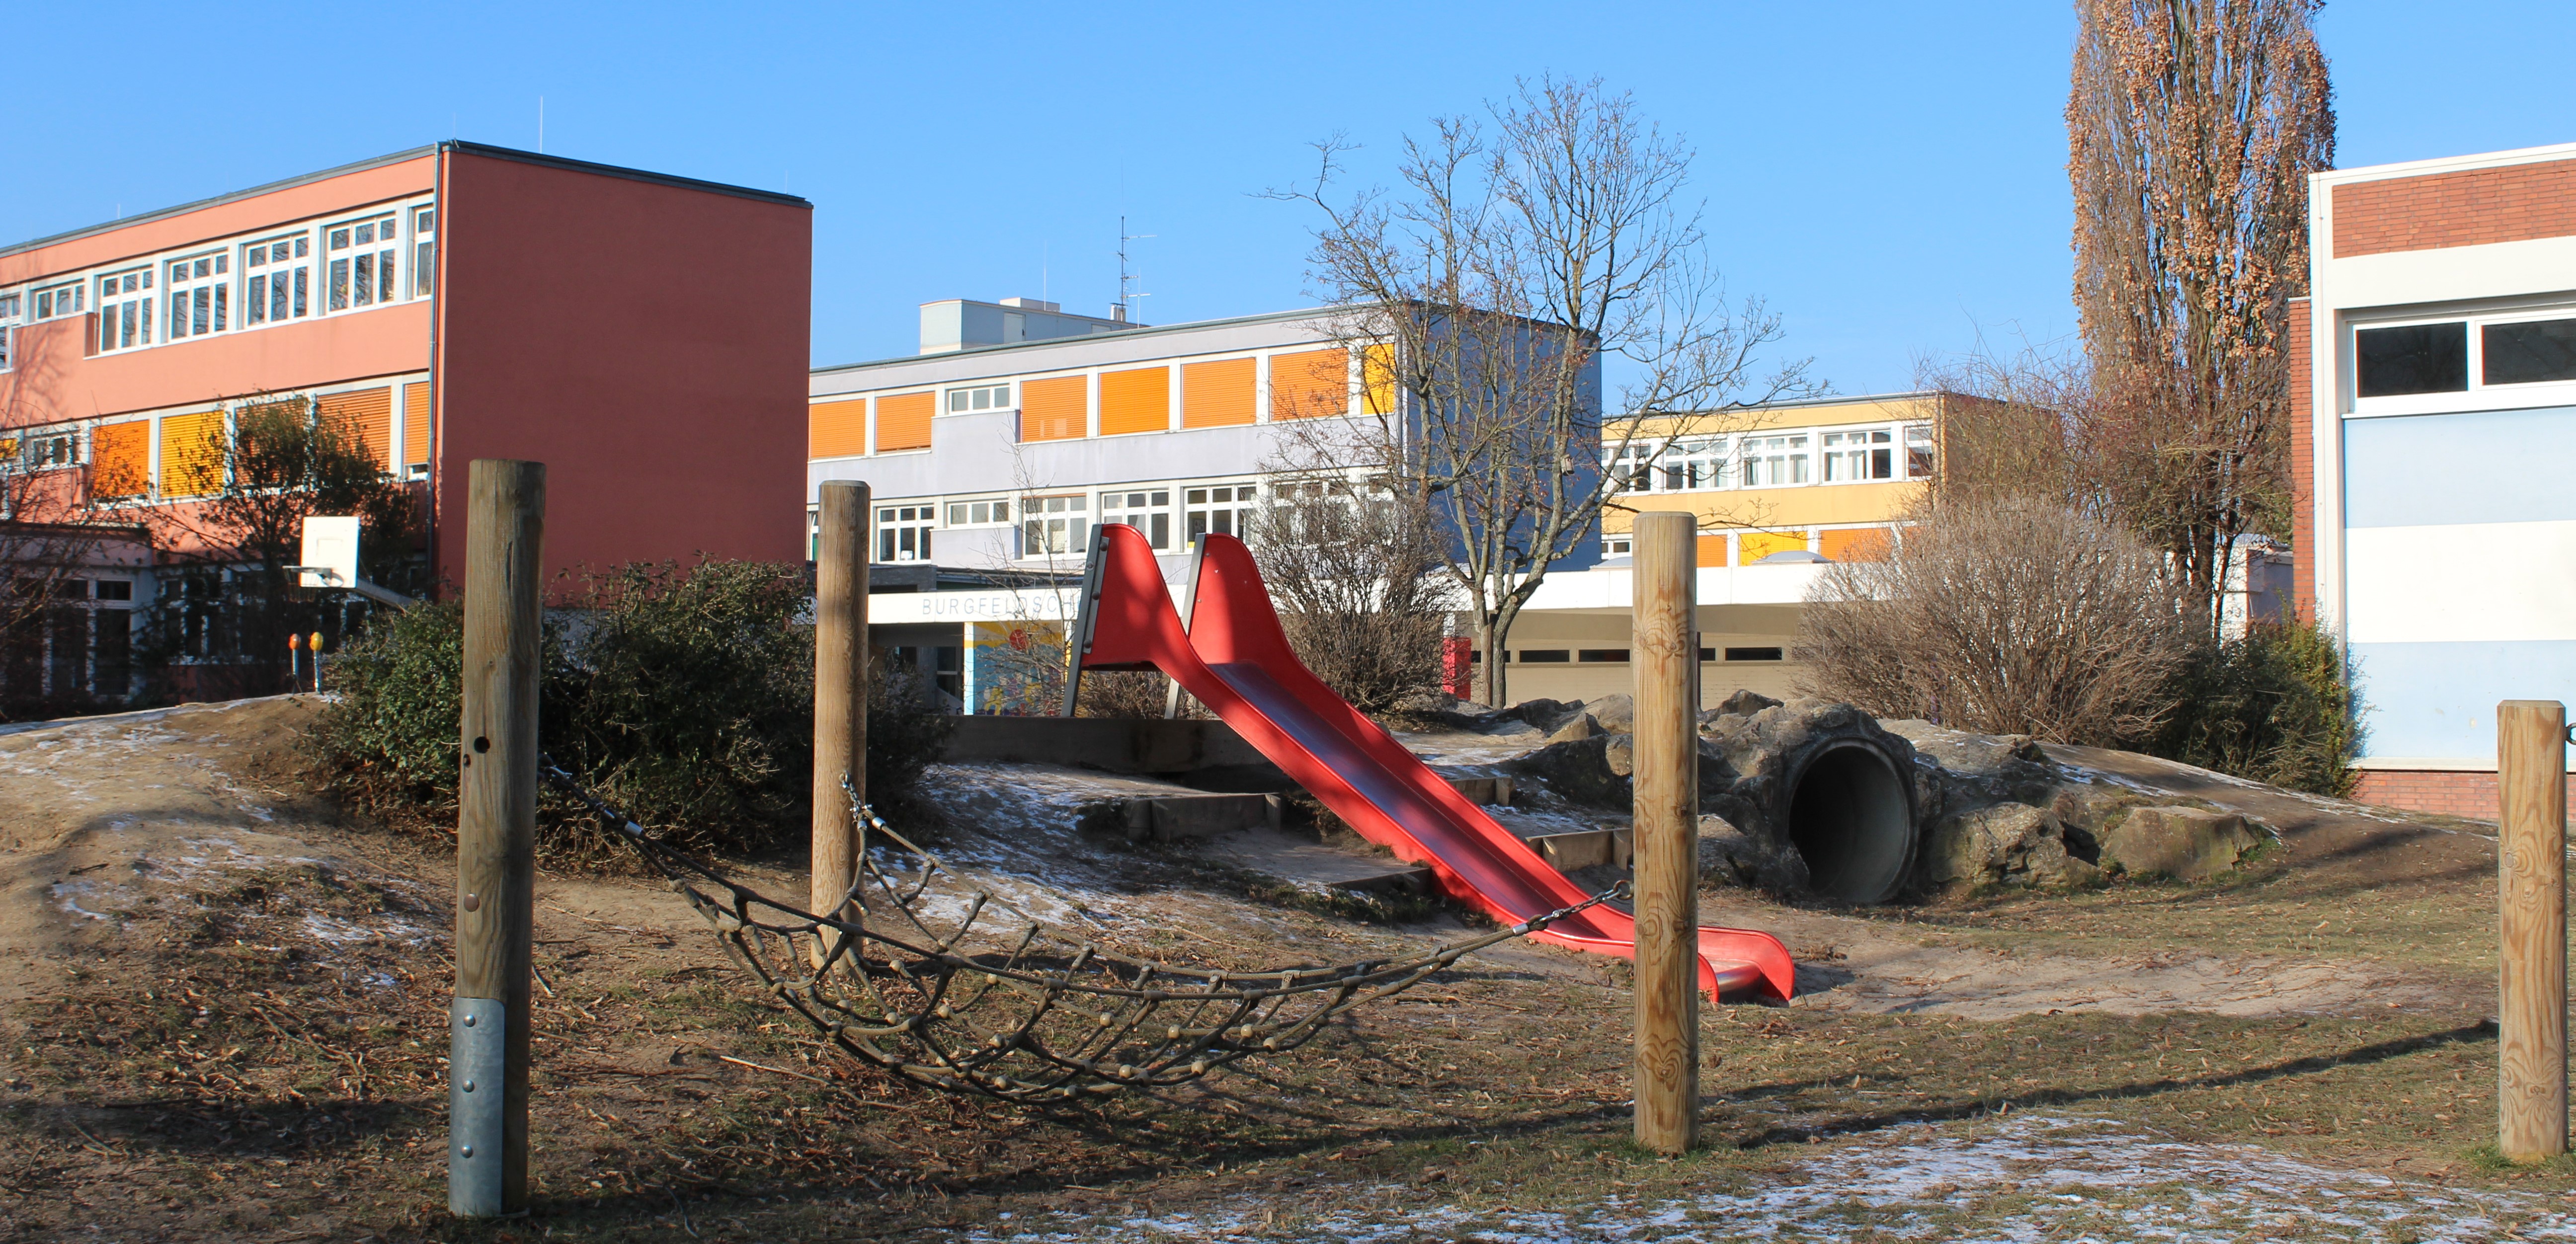 http://burgfeldschule-speyer.de/wp-content/uploads/Schule3.jpg